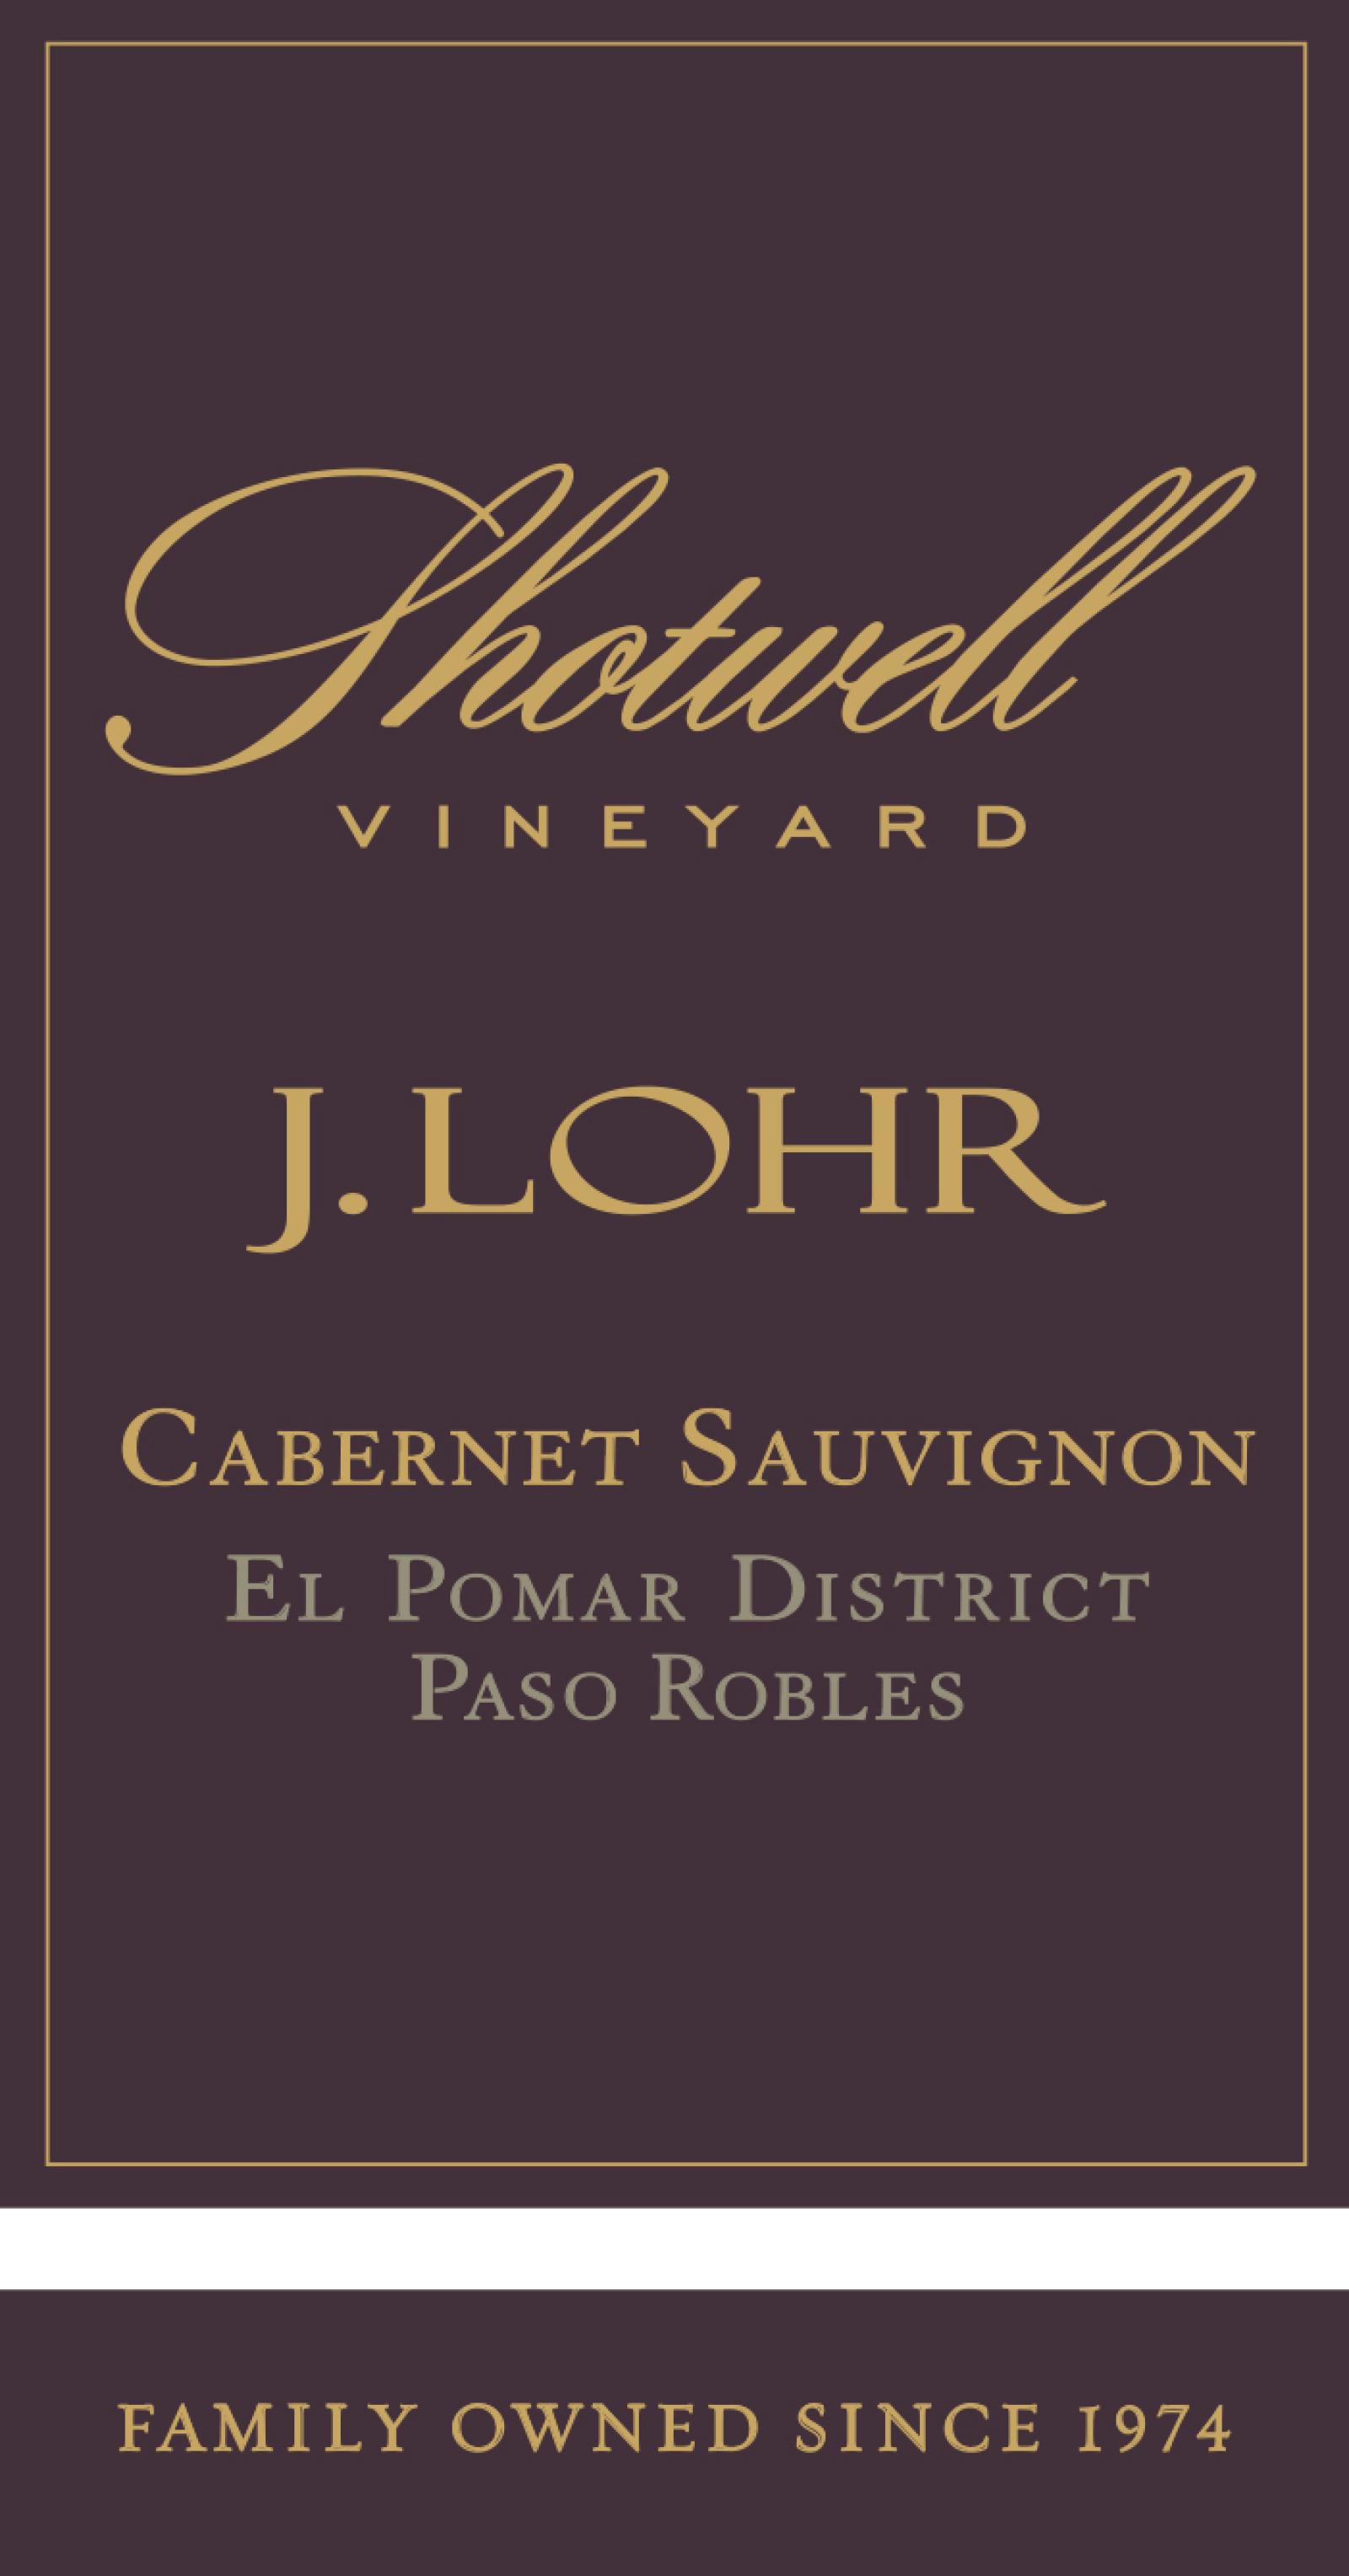 J Lohr Shotwell Vineyard Cabernet Sauvignon 2019